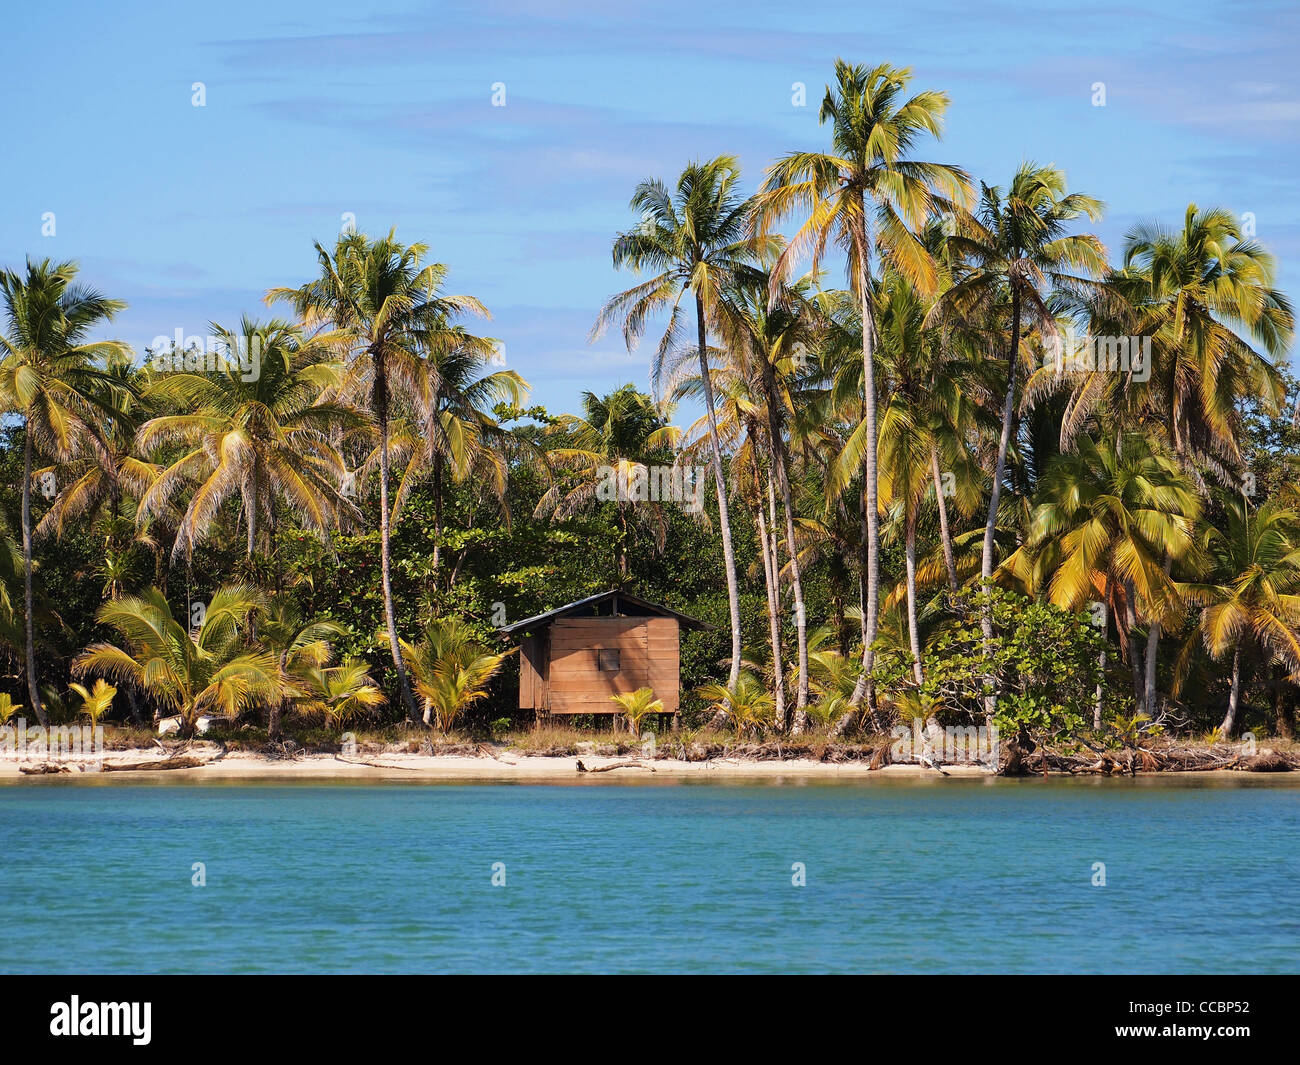 Beautiful palms on tropical beach with a hut, caribbean sea Stock Photo